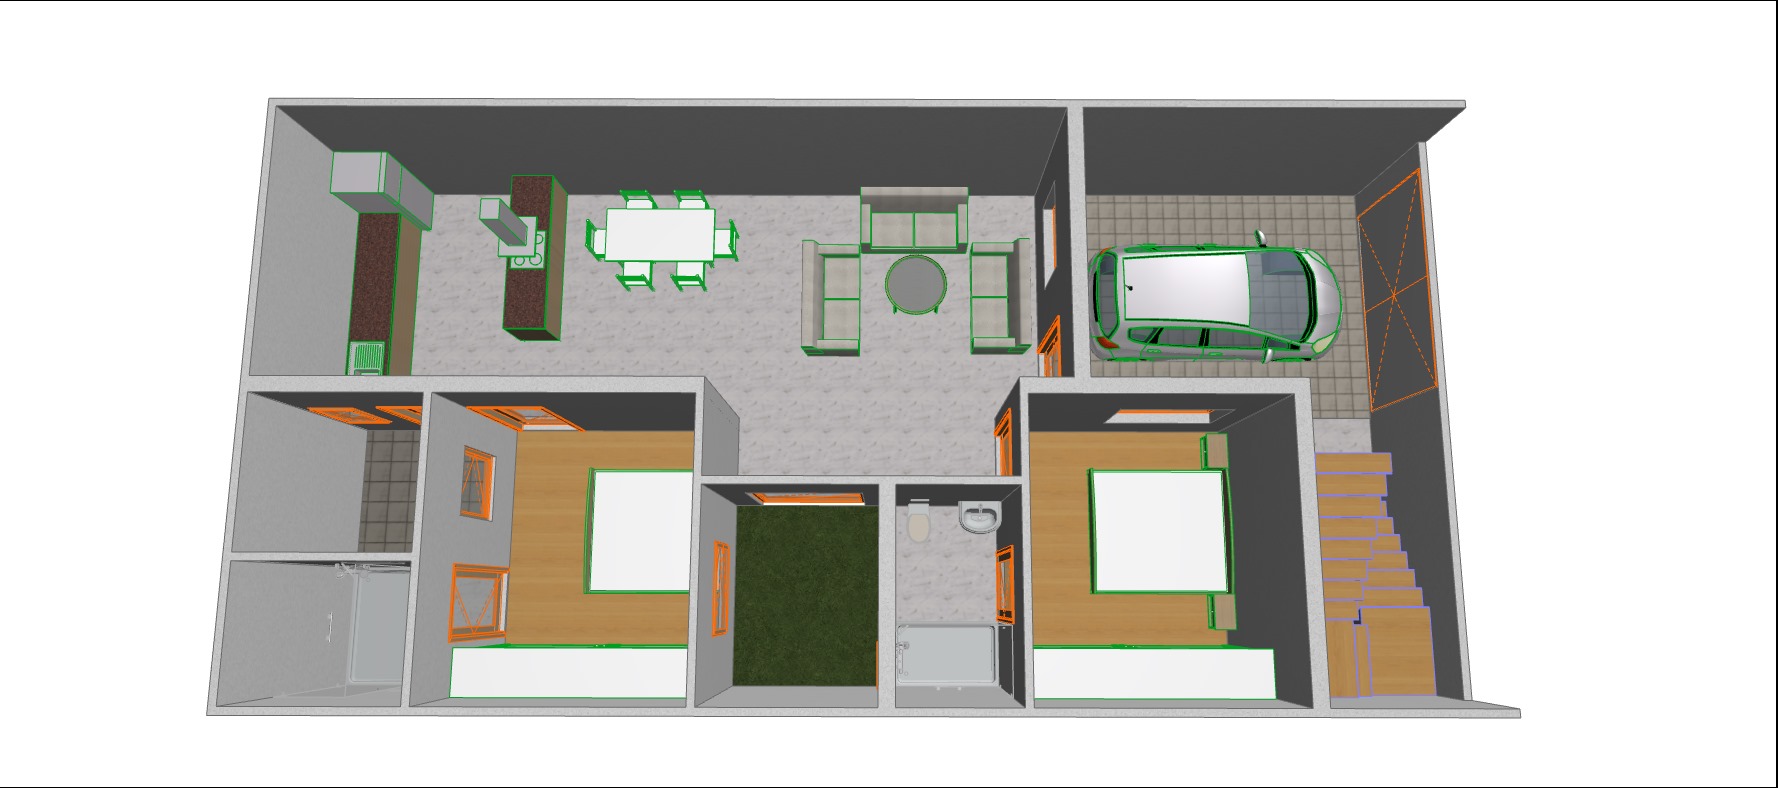 20ft x 50ft house plan option 1.1